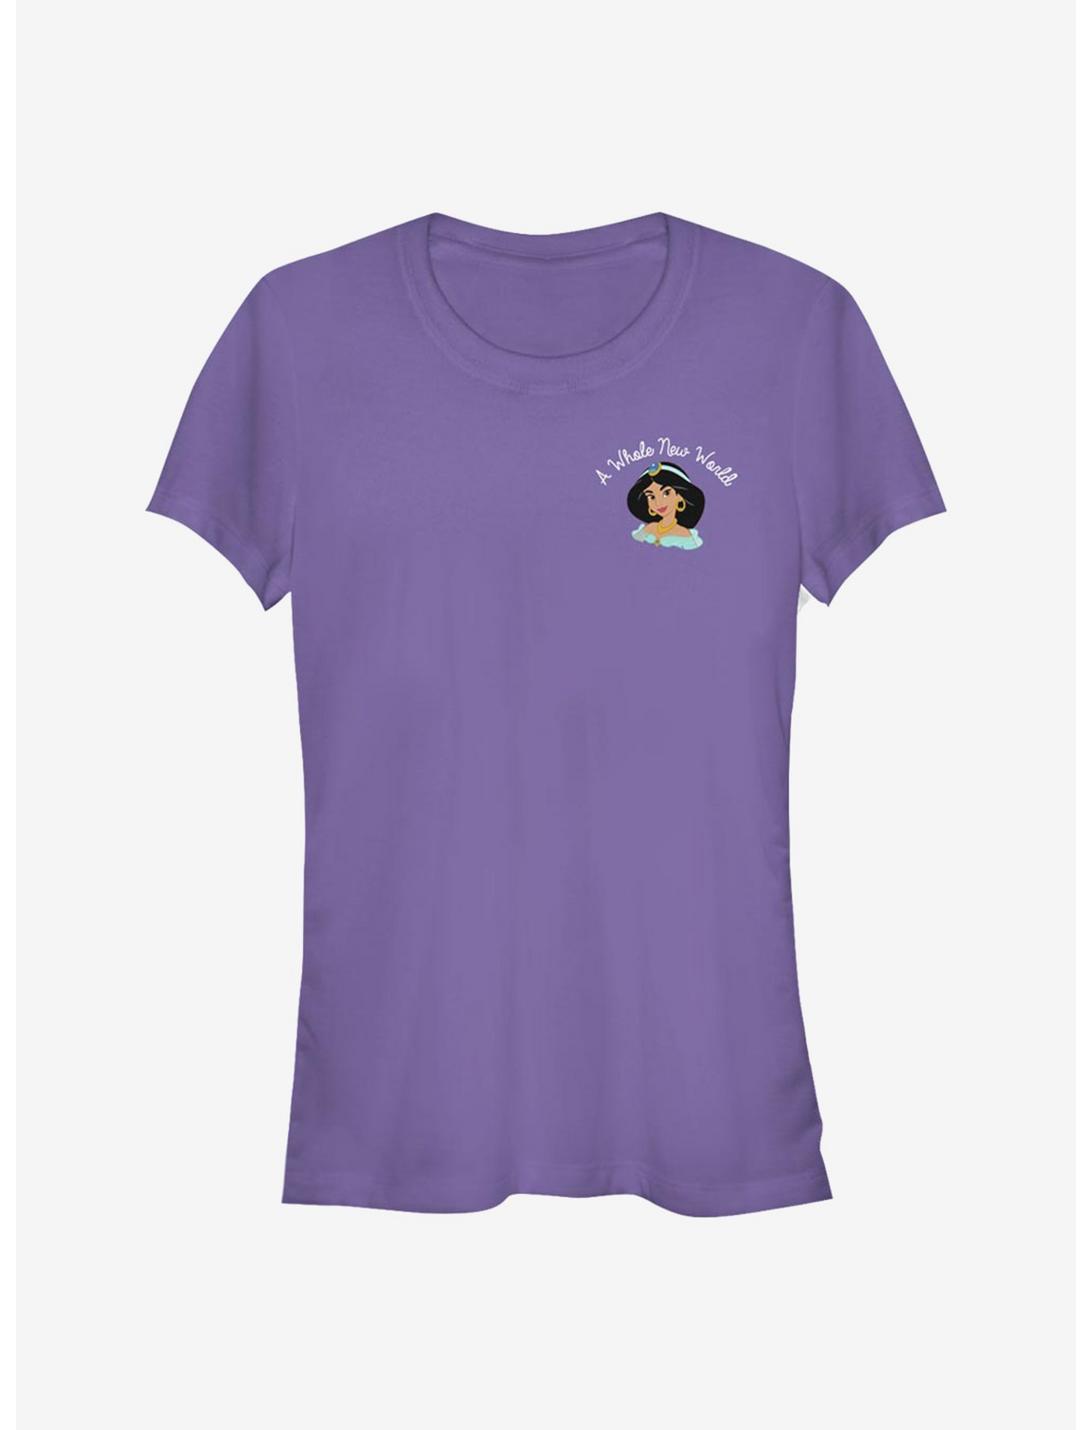 Disney Aladdin Jasmine Girls T-Shirt, PURPLE, hi-res